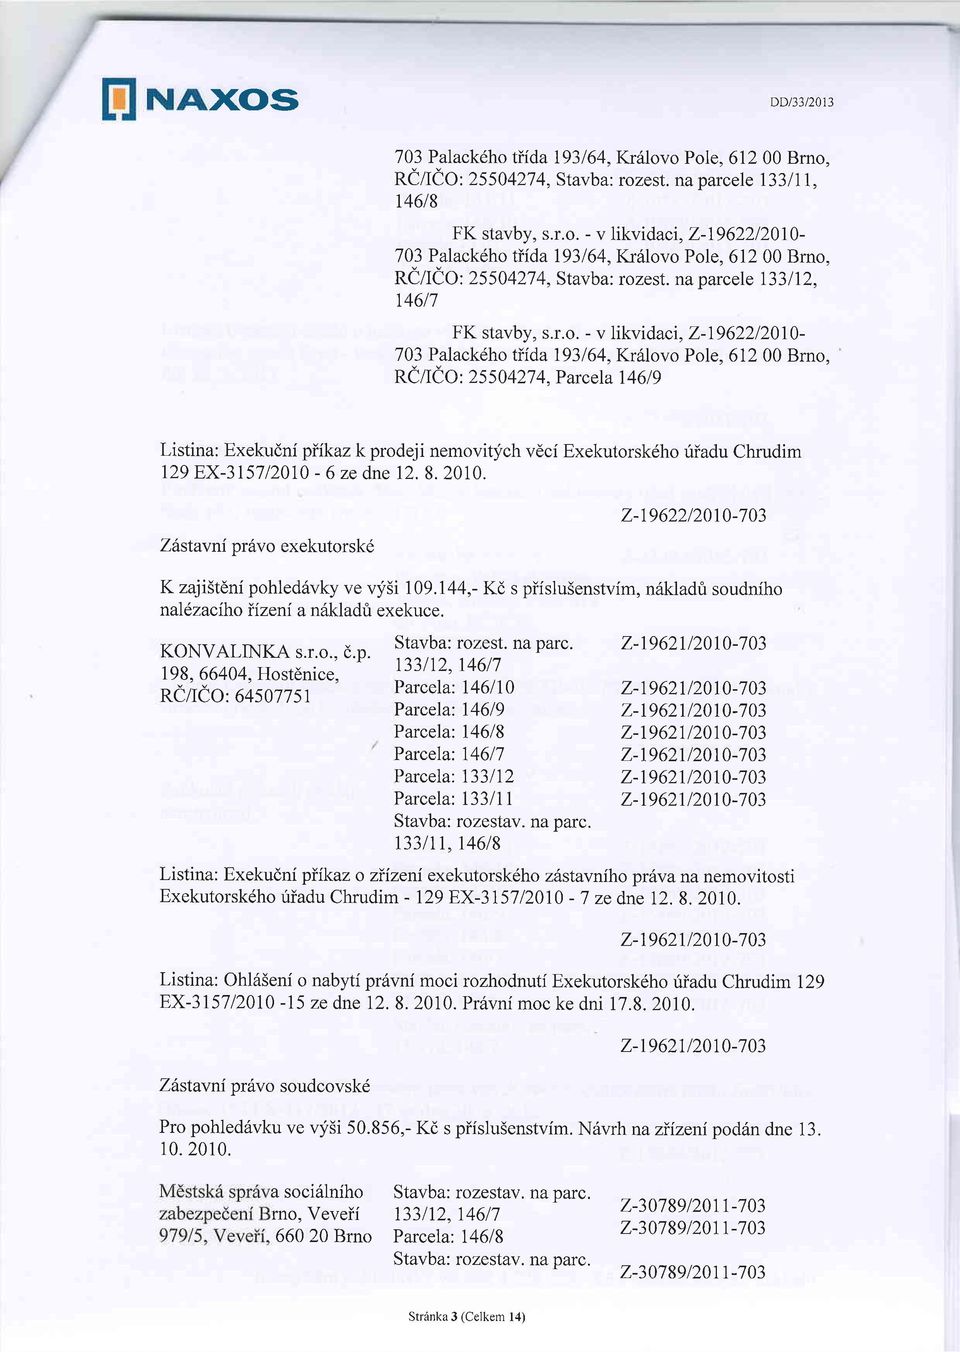 Parcela t46lg Listina: Exekudnf piikaz k prodeji nemovitl;ich vdci Exekutorsk6ho riiadu Chrudim 129 EX-315712010-6 ze dne 12.8. 2010.